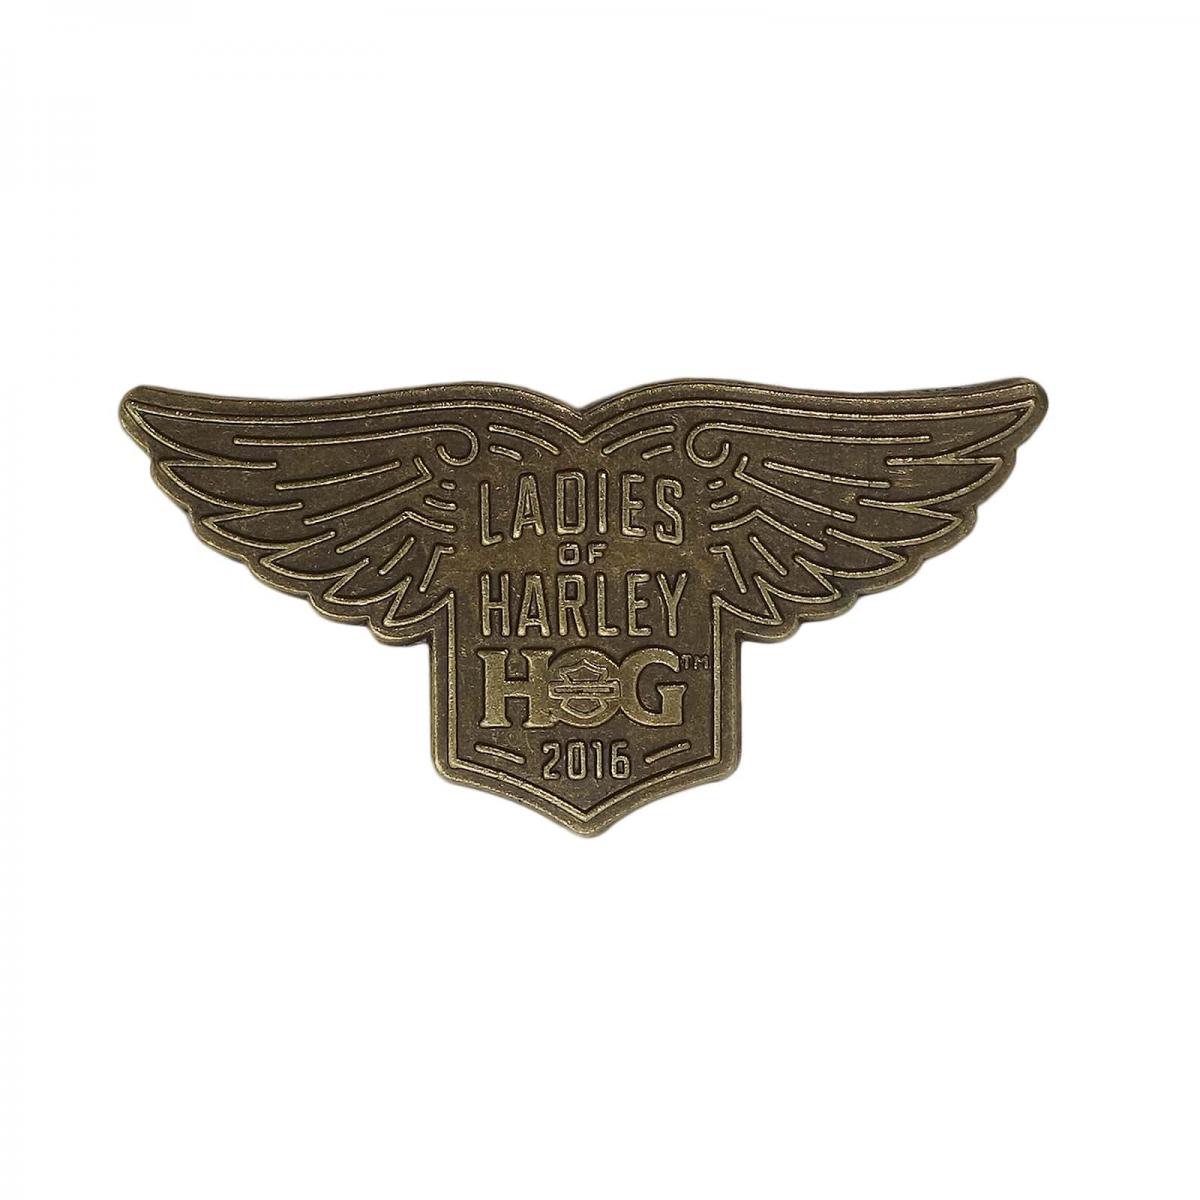 LADIES OF HARLEY バイカー ピンズ H.O.G. 2016 ハーレー 留め具付き